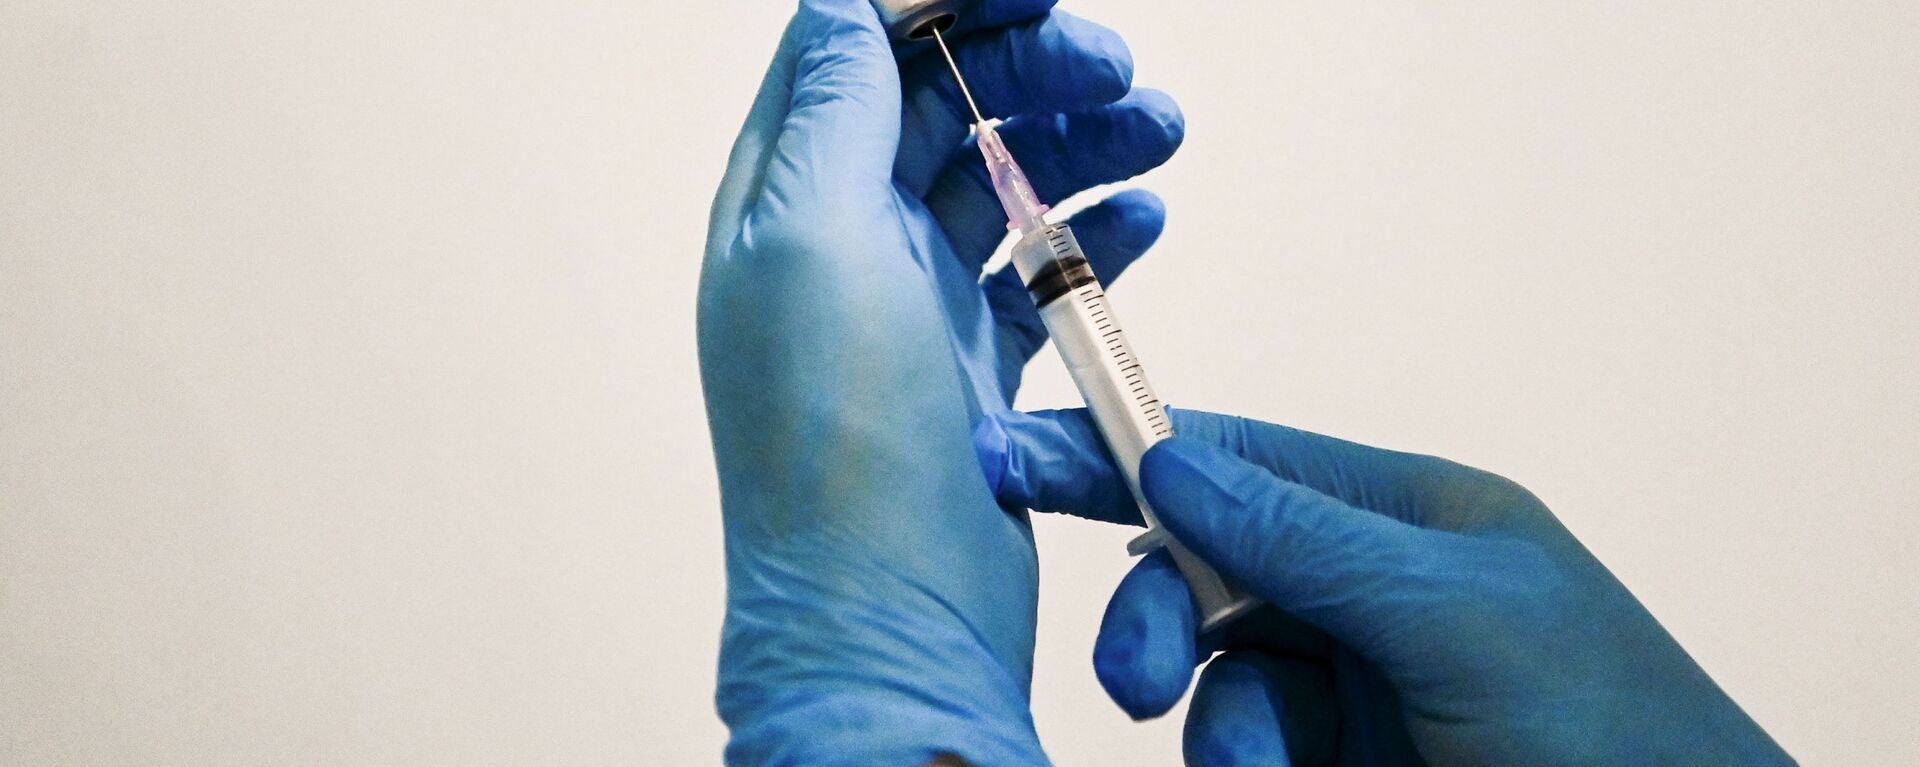 Медицинский сотрудник держит в руках вакцину Спутник V в пункте вакцинации - Sputnik Литва, 1920, 23.01.2021